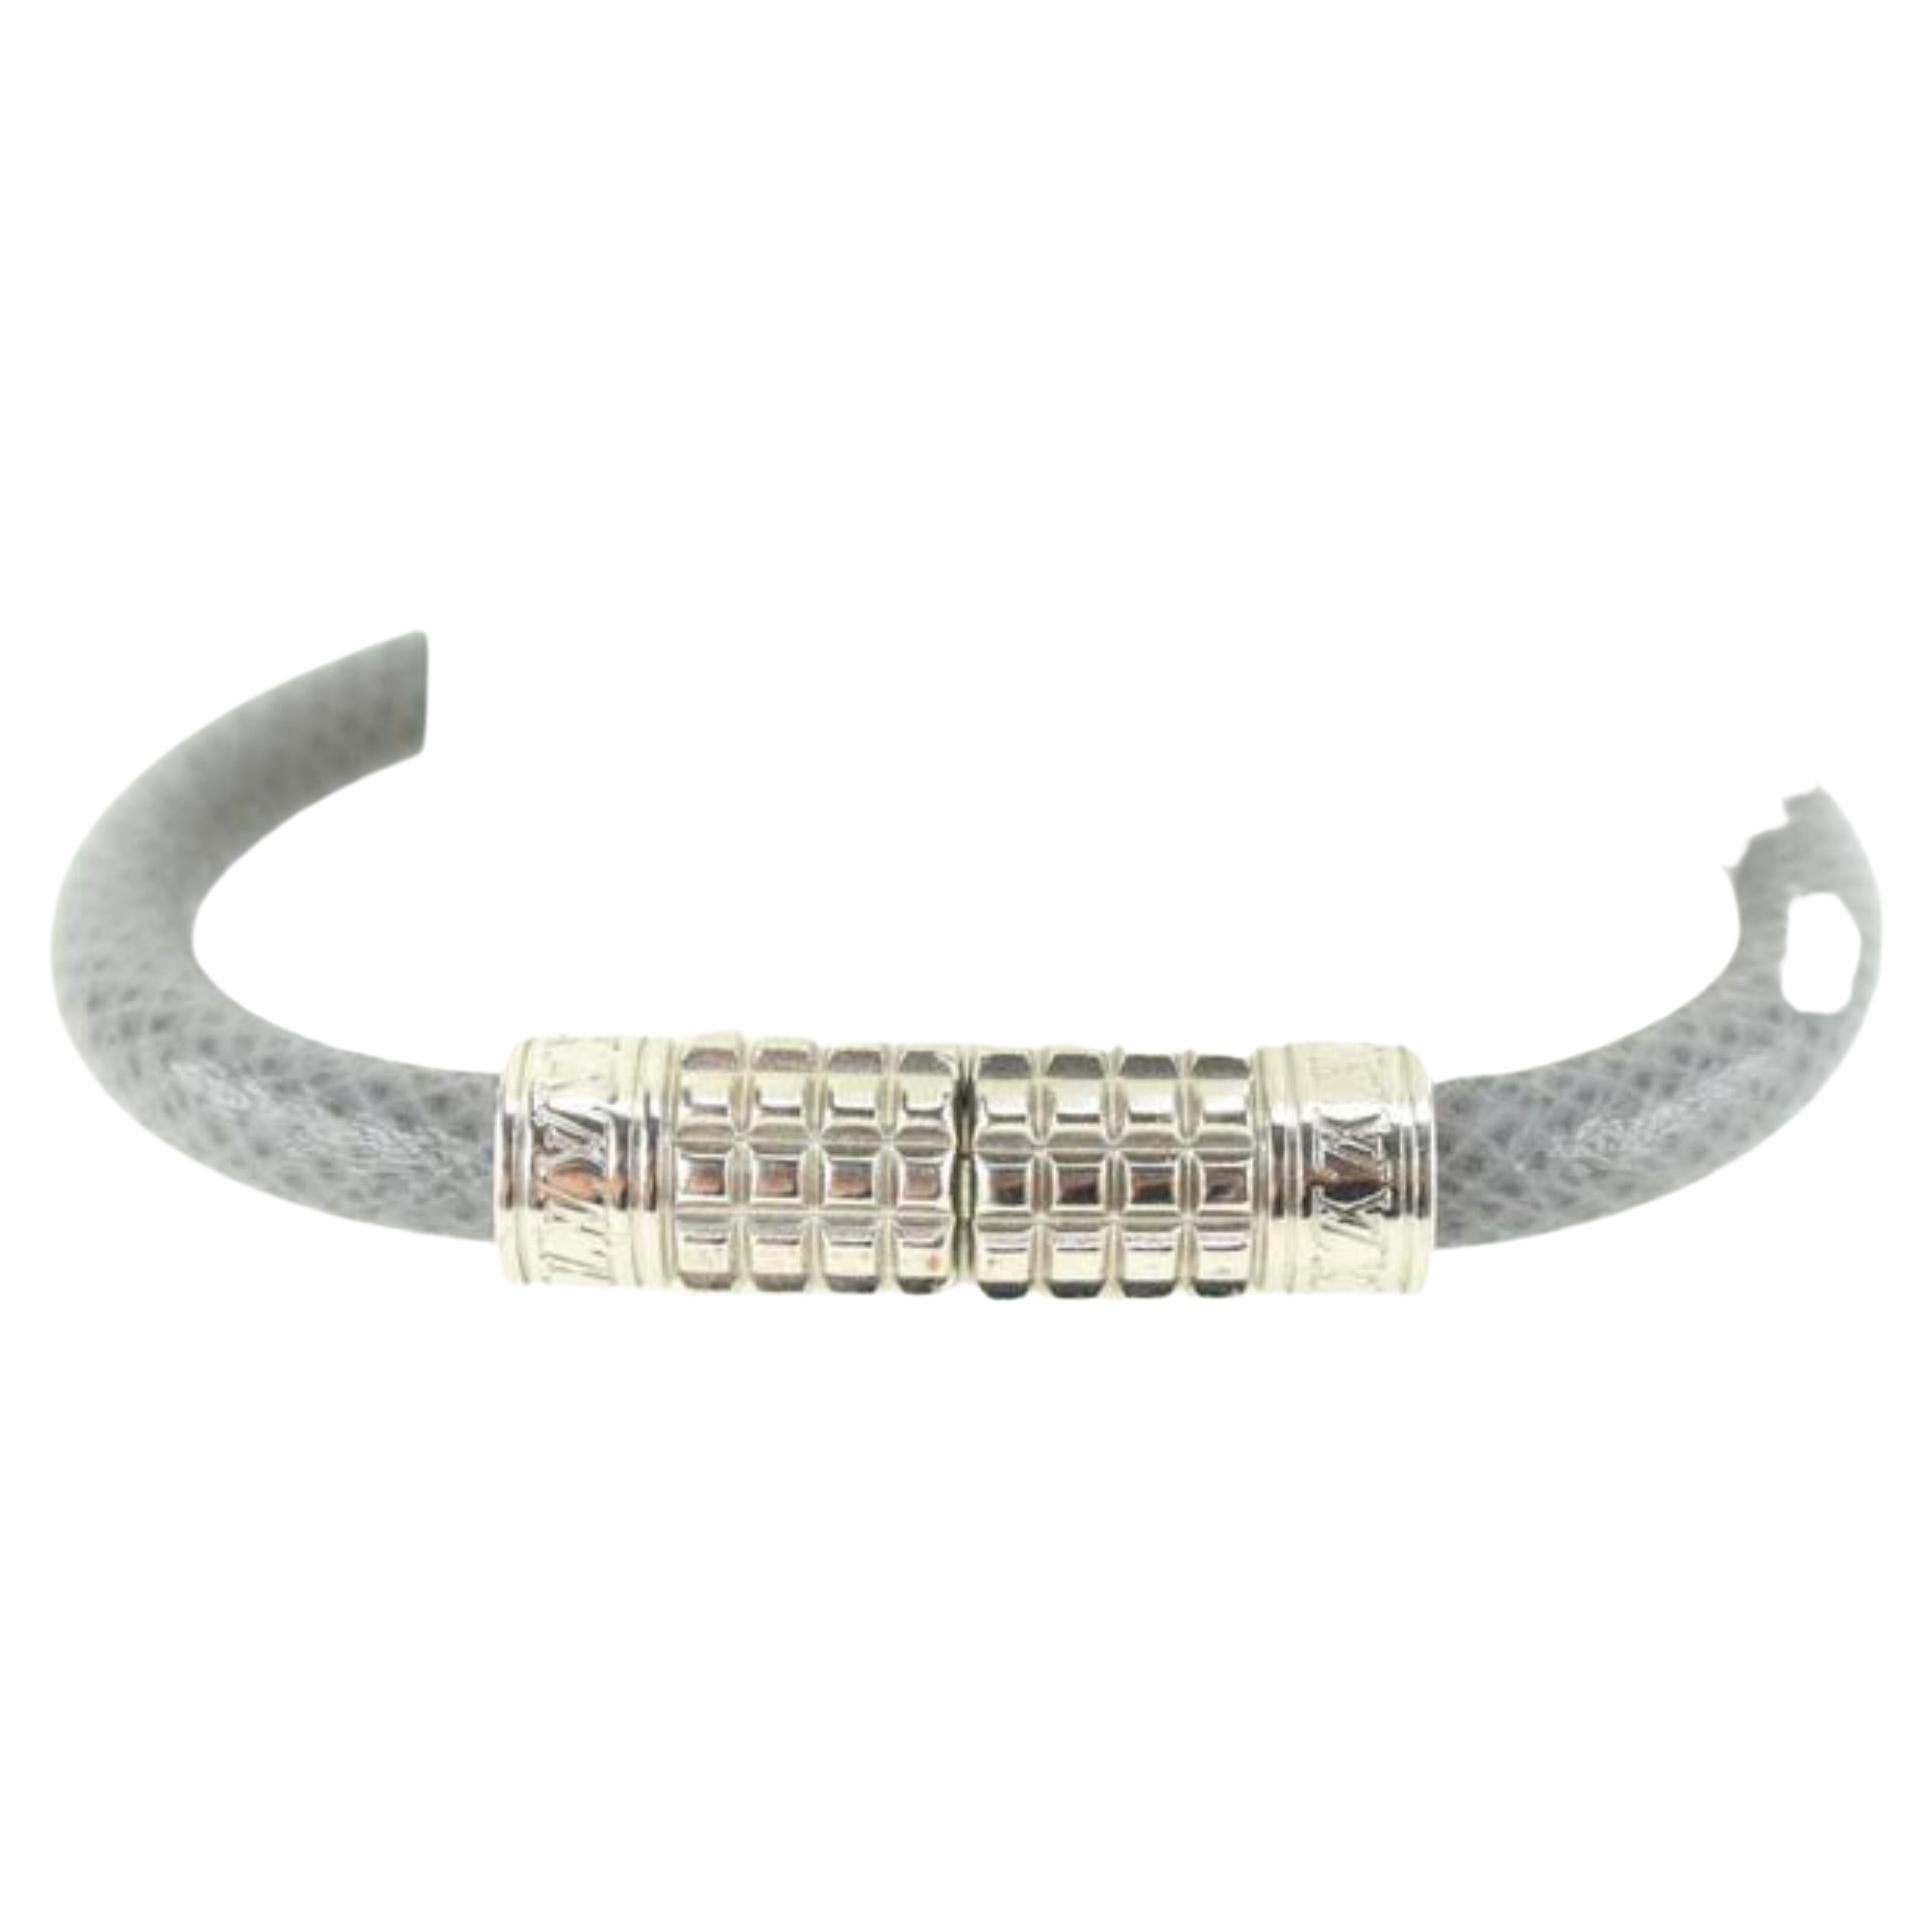 Louis Vuitton Leather Bracelet - For Sale on 1stDibs  lv leather bracelet,  leather louis vuitton bracelet, louis vitton leather bracelet